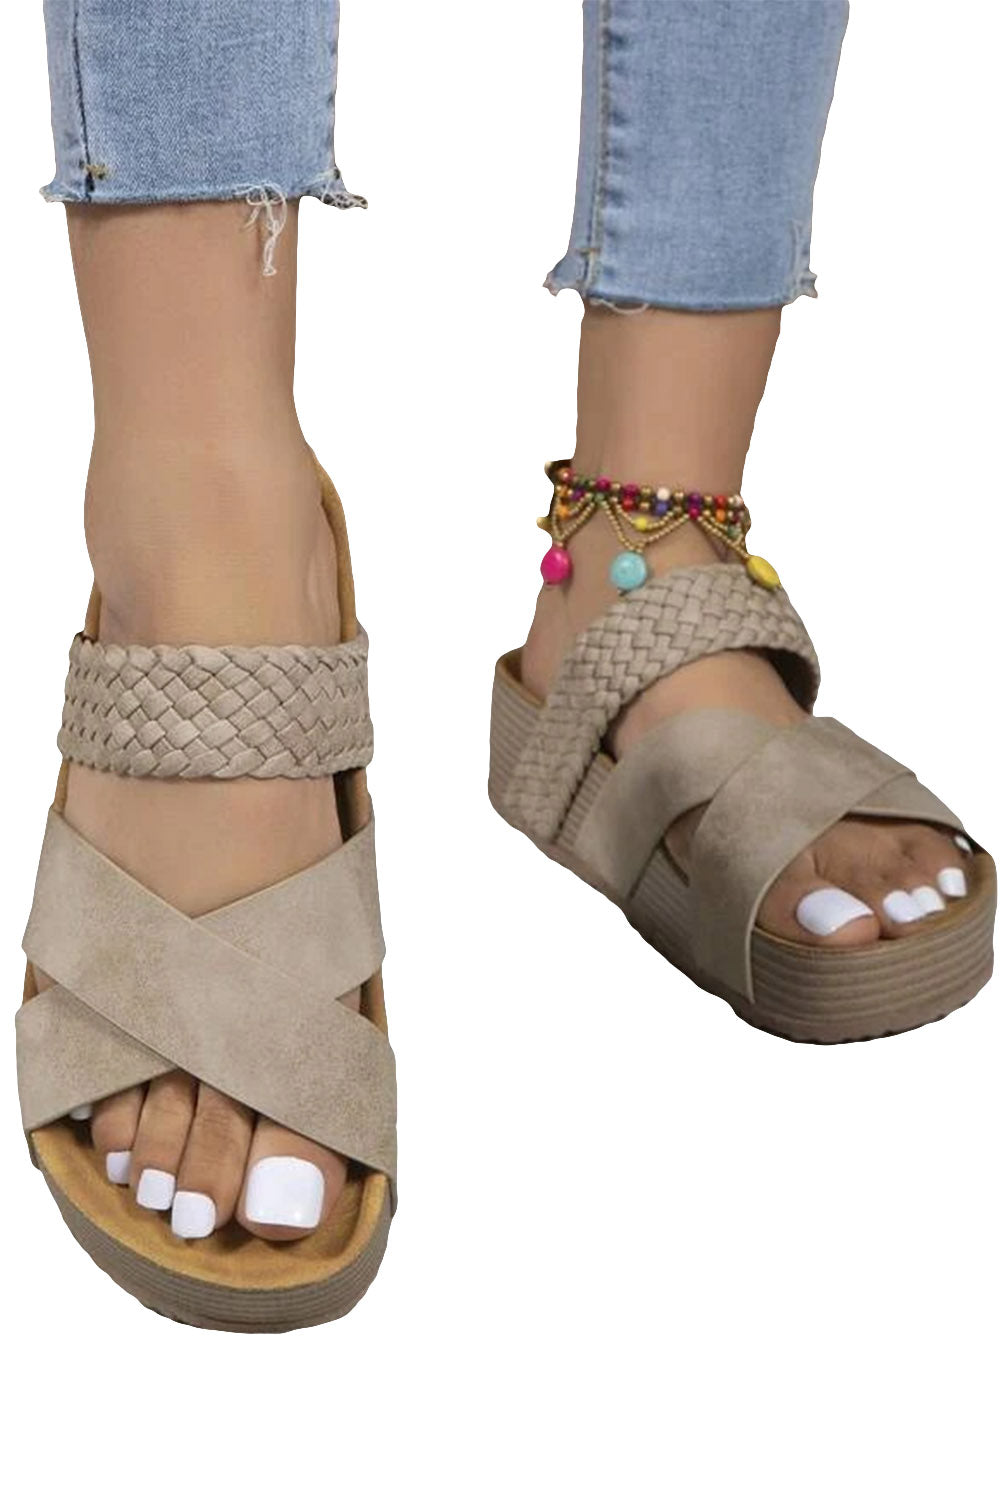 Braided Sandals for Women Criss Cross Beach Travel Platform Slippers